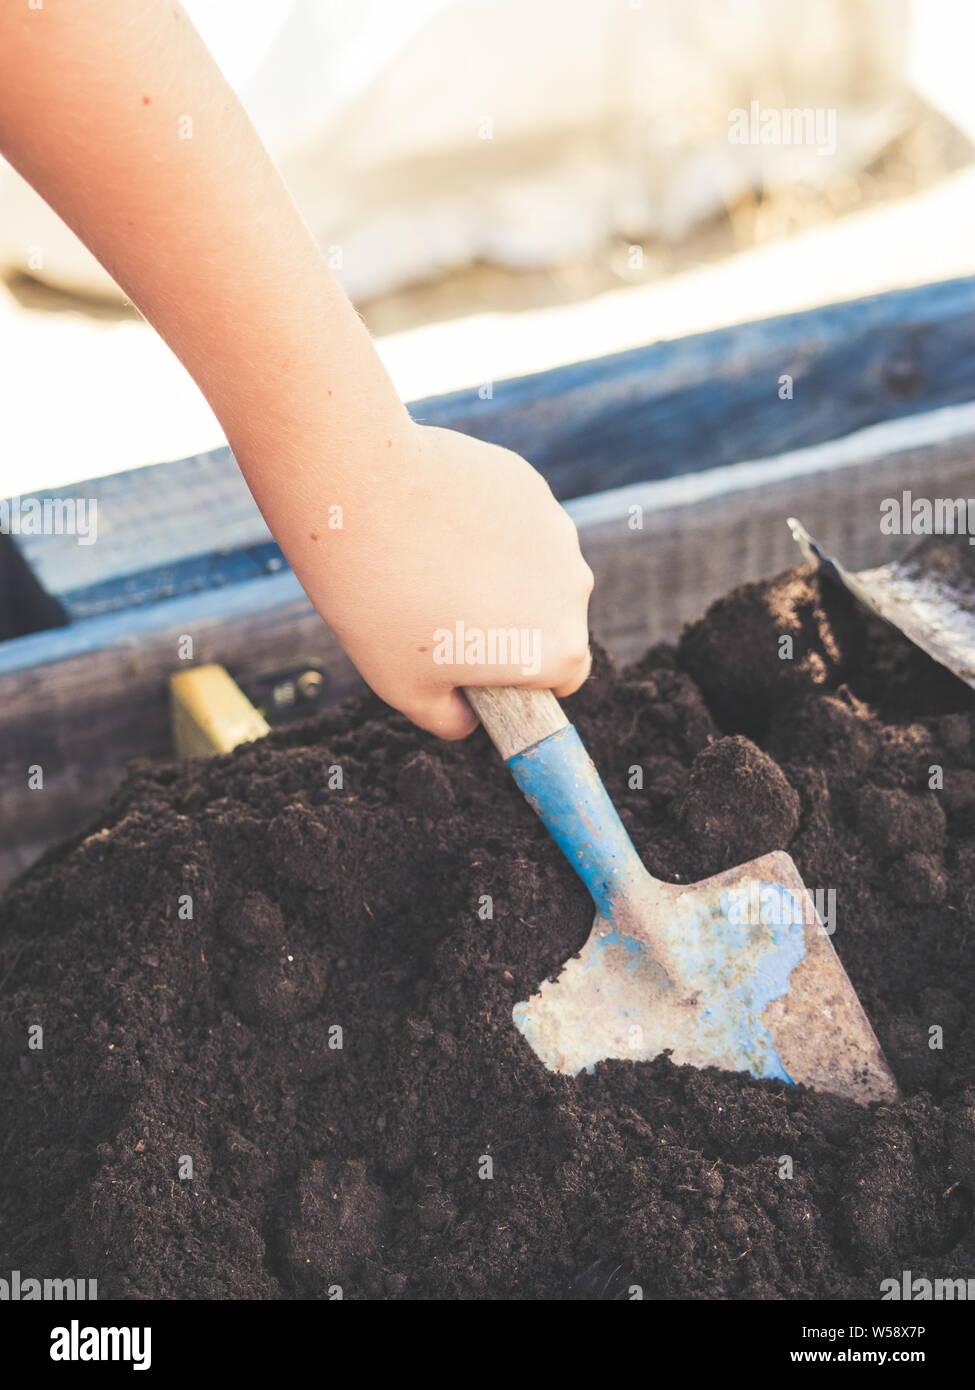 Child's hand holding a small shovel Stock Photo